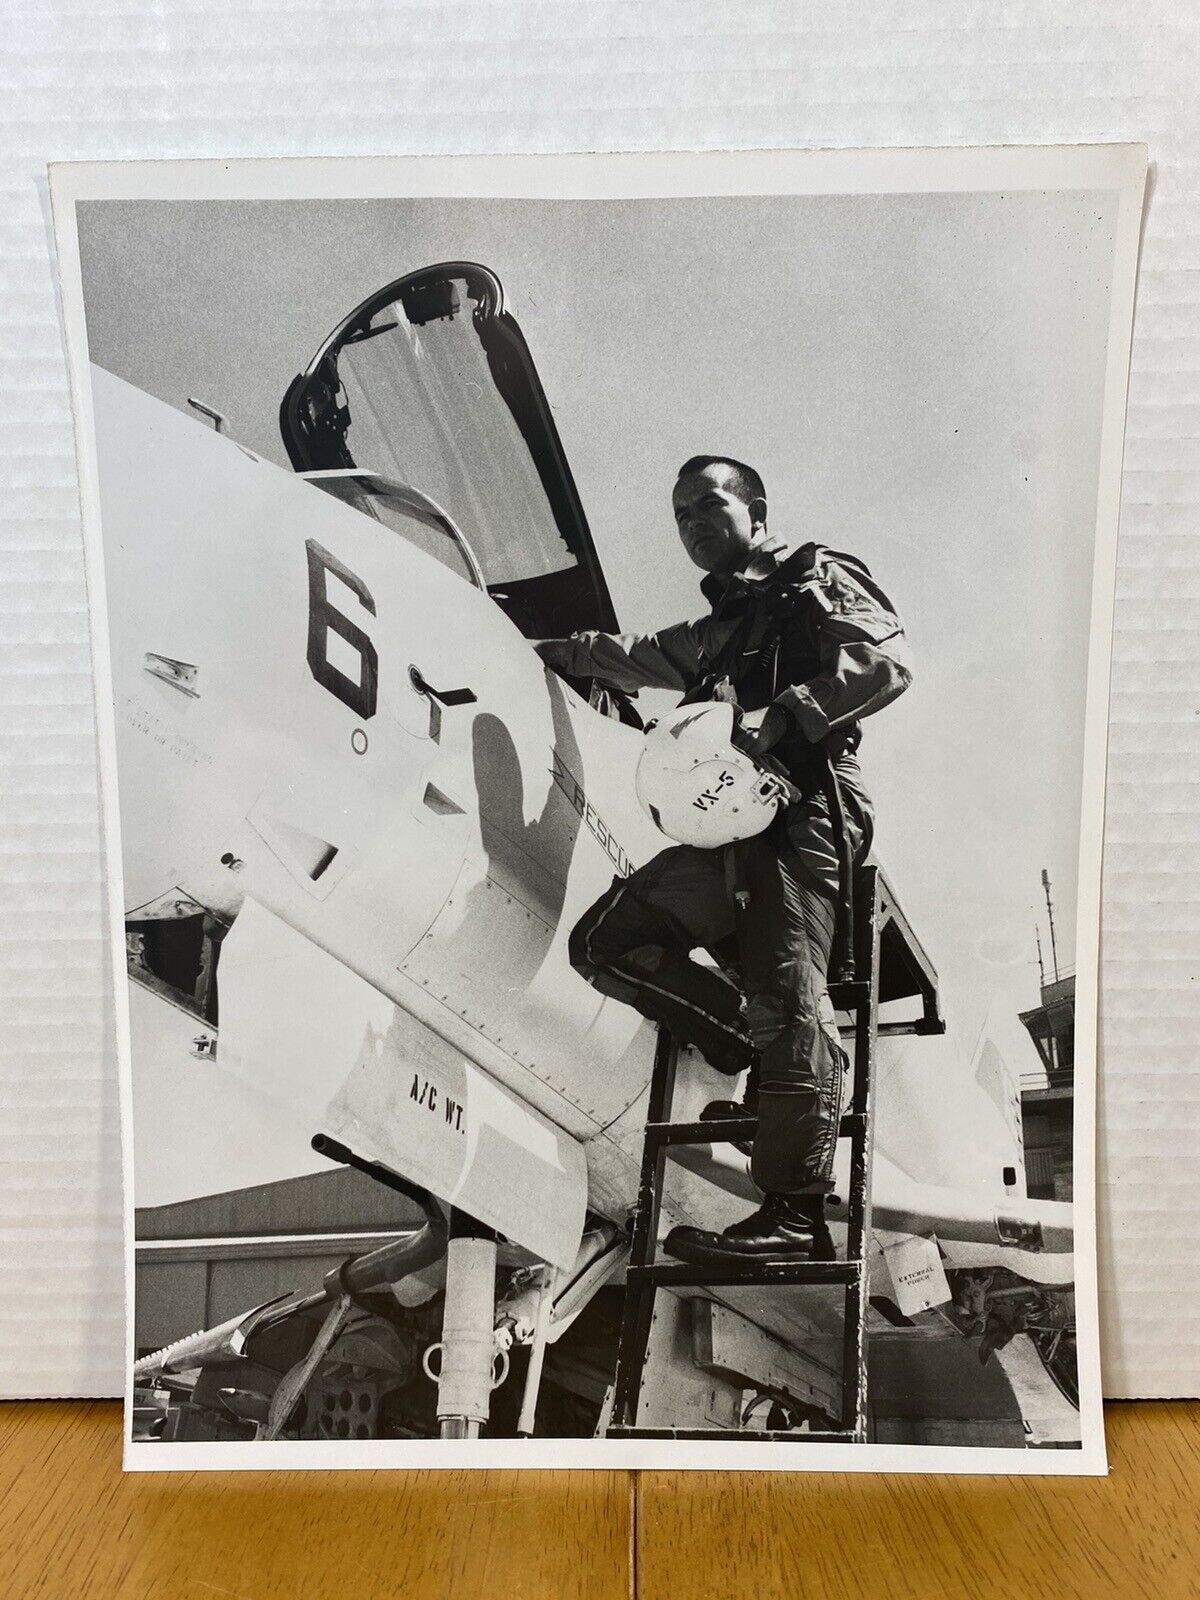 DOUGLAS A-4 EX-5 SKYHAWK NAVY PILOT WARD - XE 5064 STAMPED ON THE BACK SEP-1966